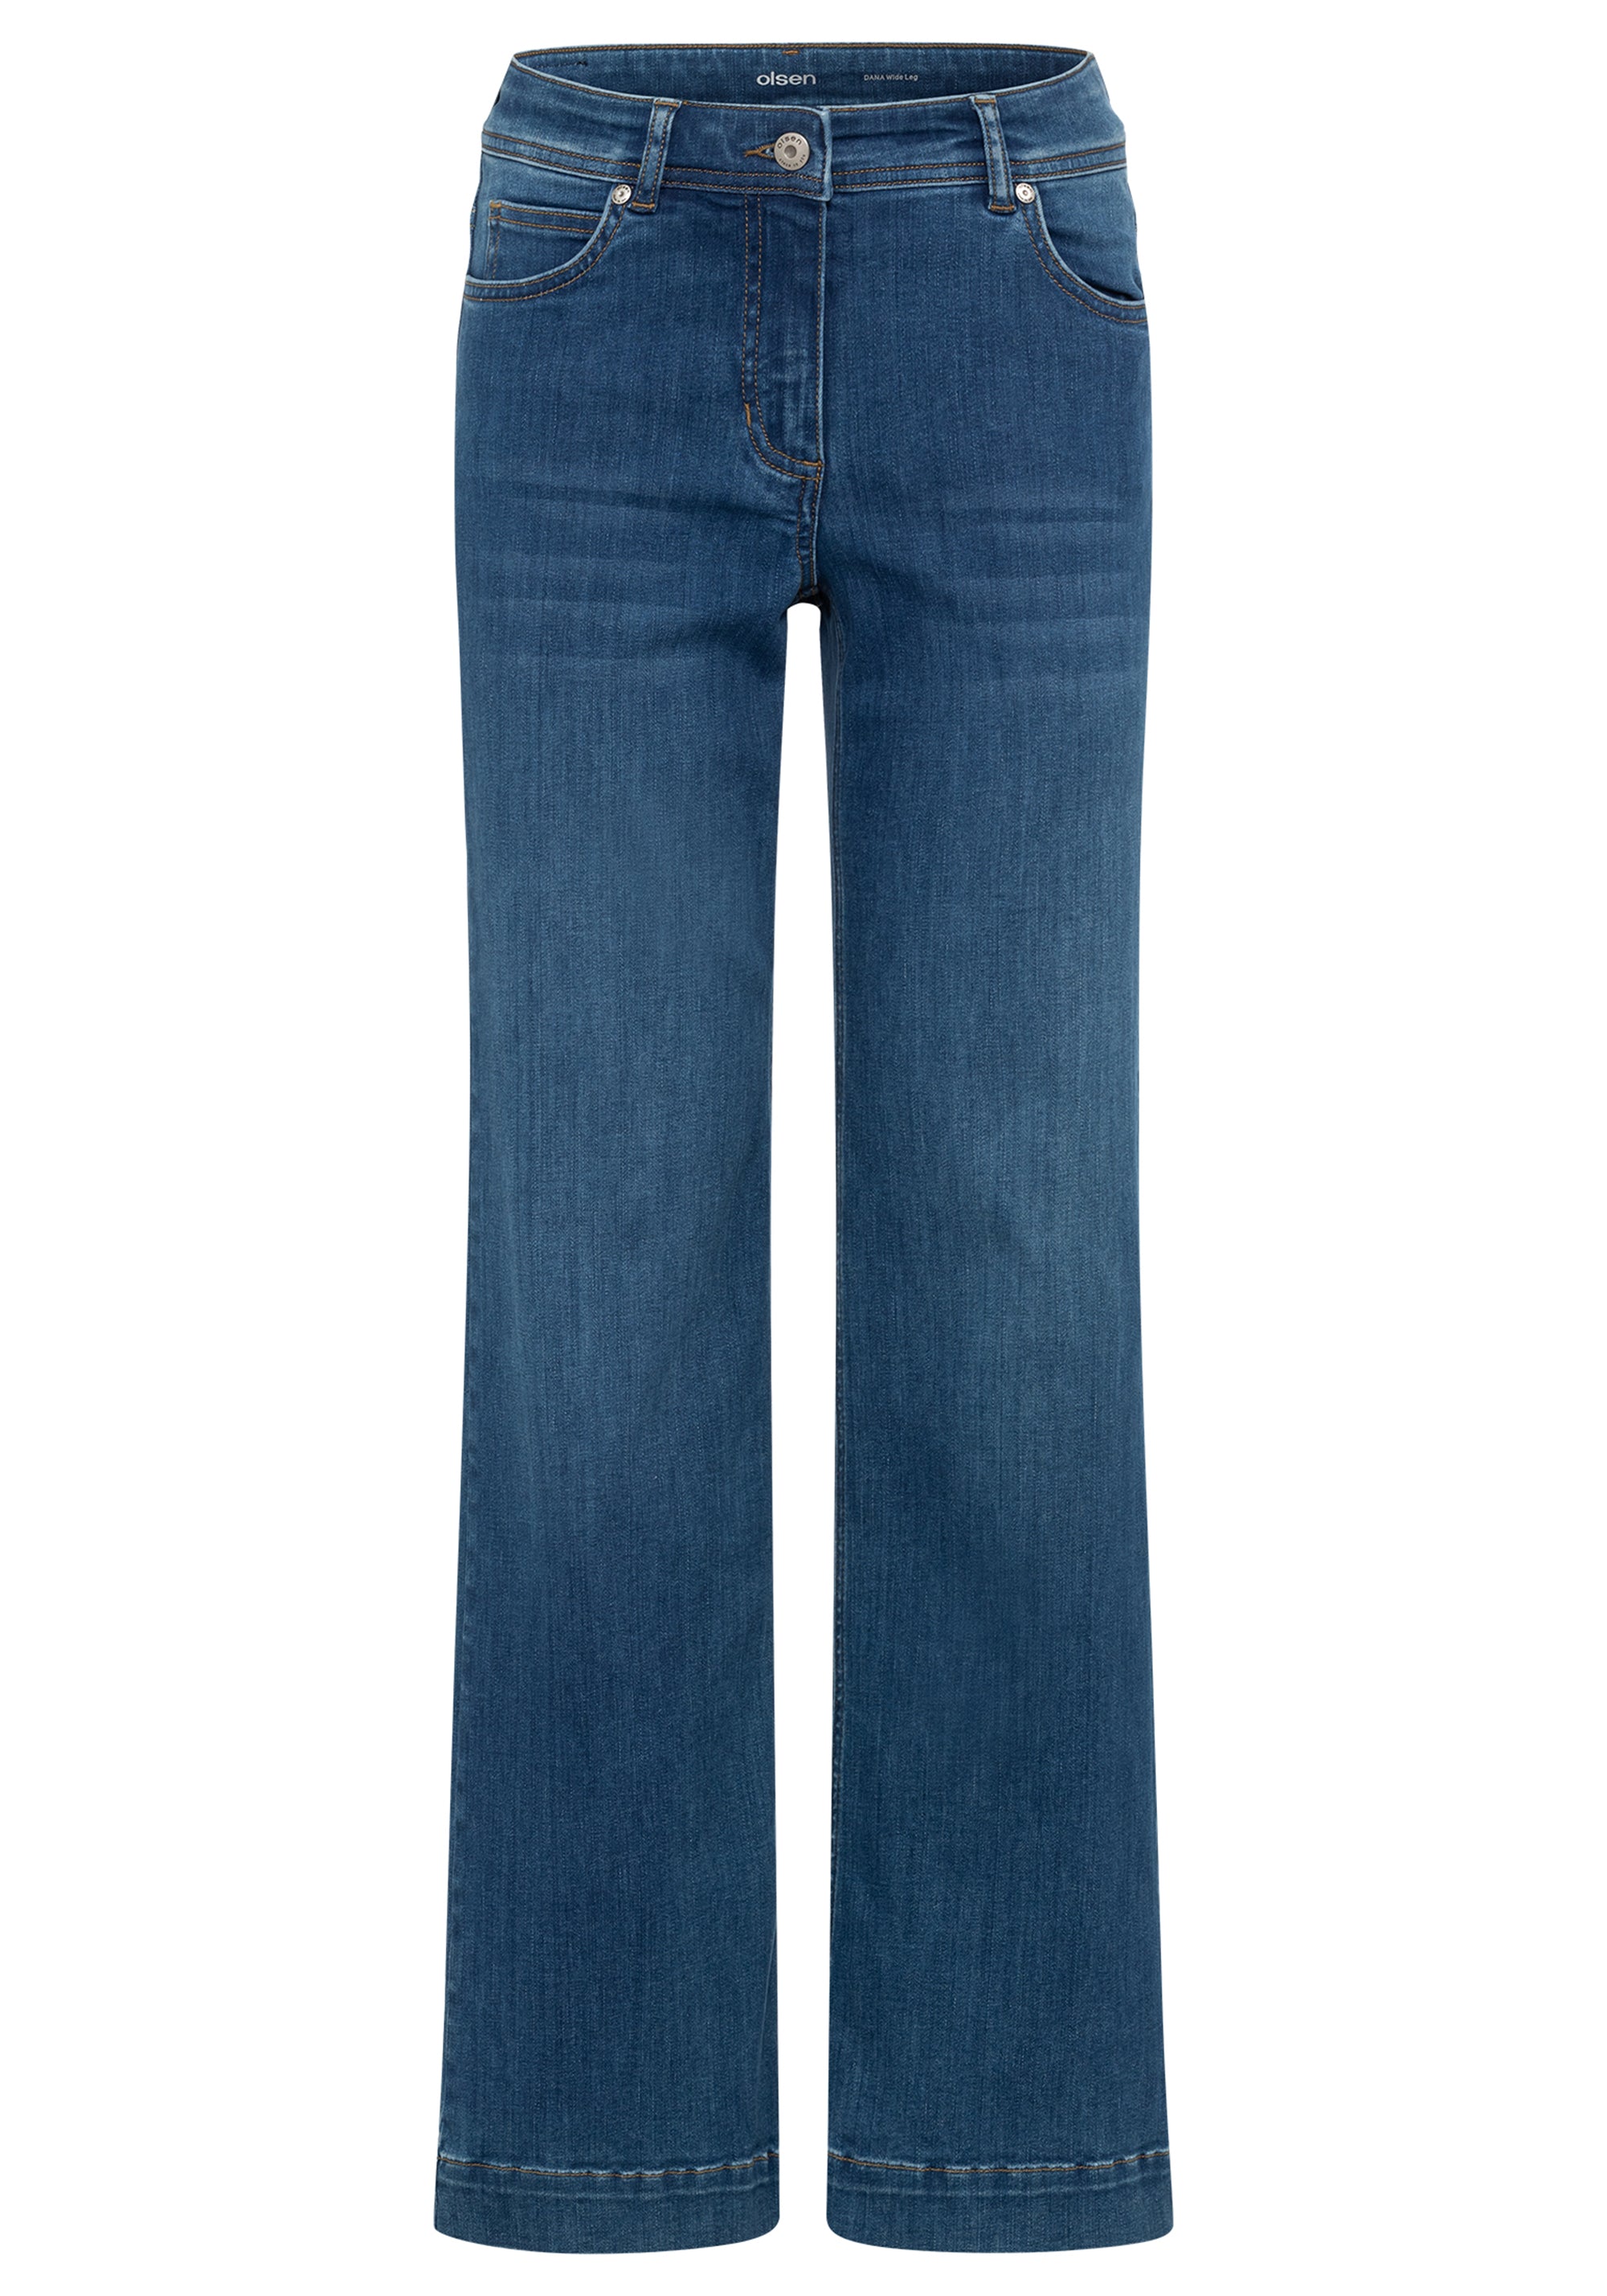 Mona Fit Slim Leg Power Stretch Jean containing REPREVE® - Olsen